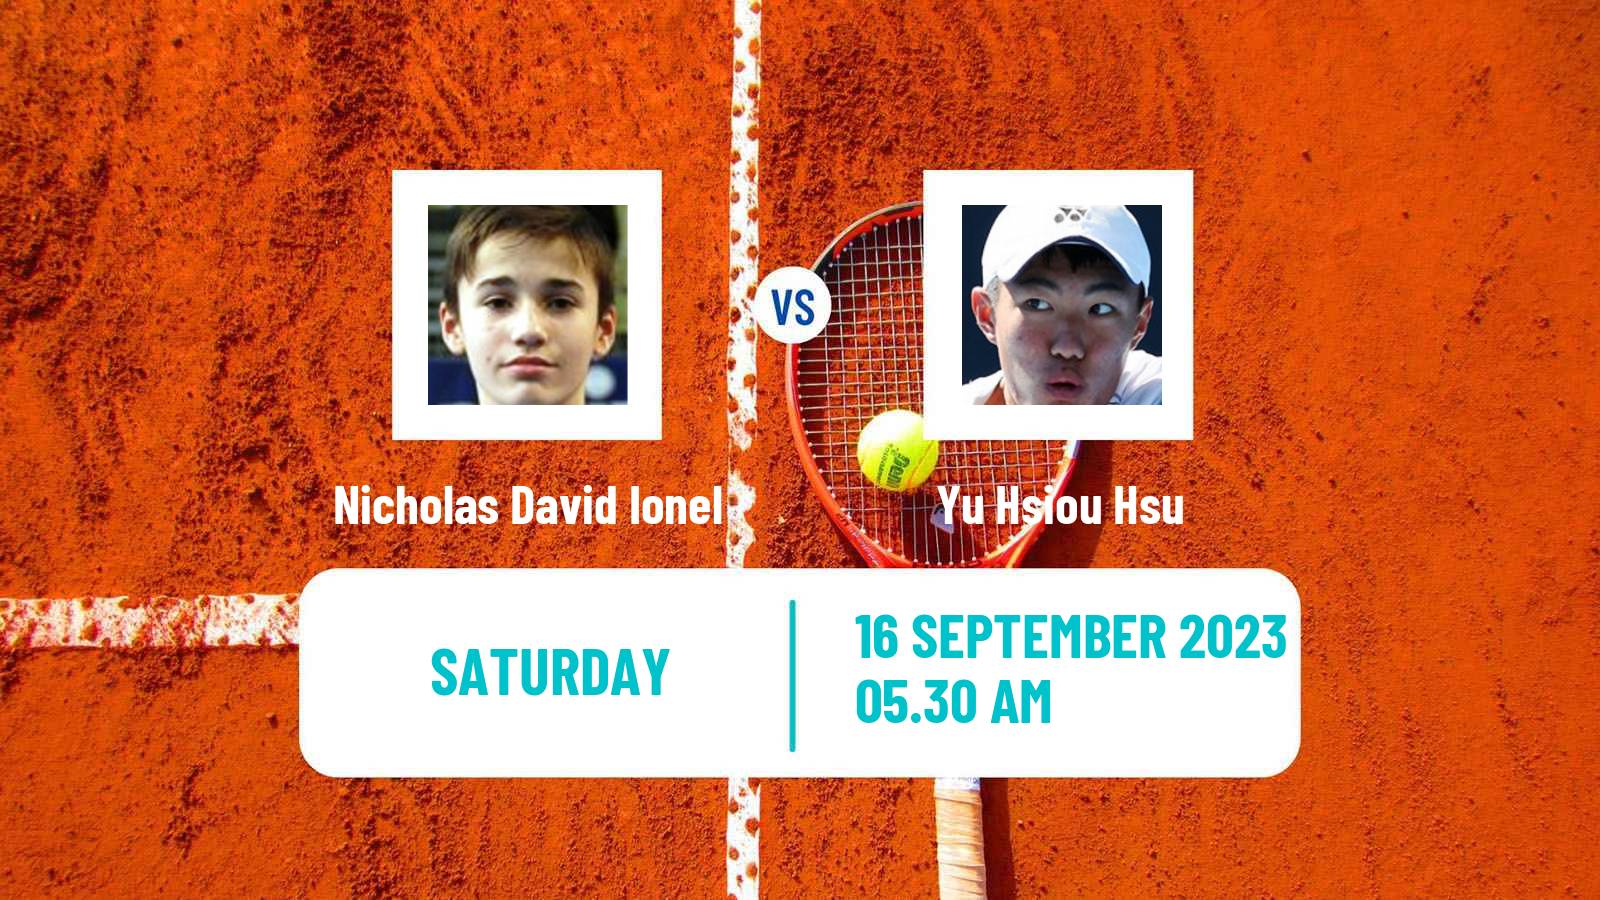 Tennis Davis Cup World Group I Nicholas David Ionel - Yu Hsiou Hsu